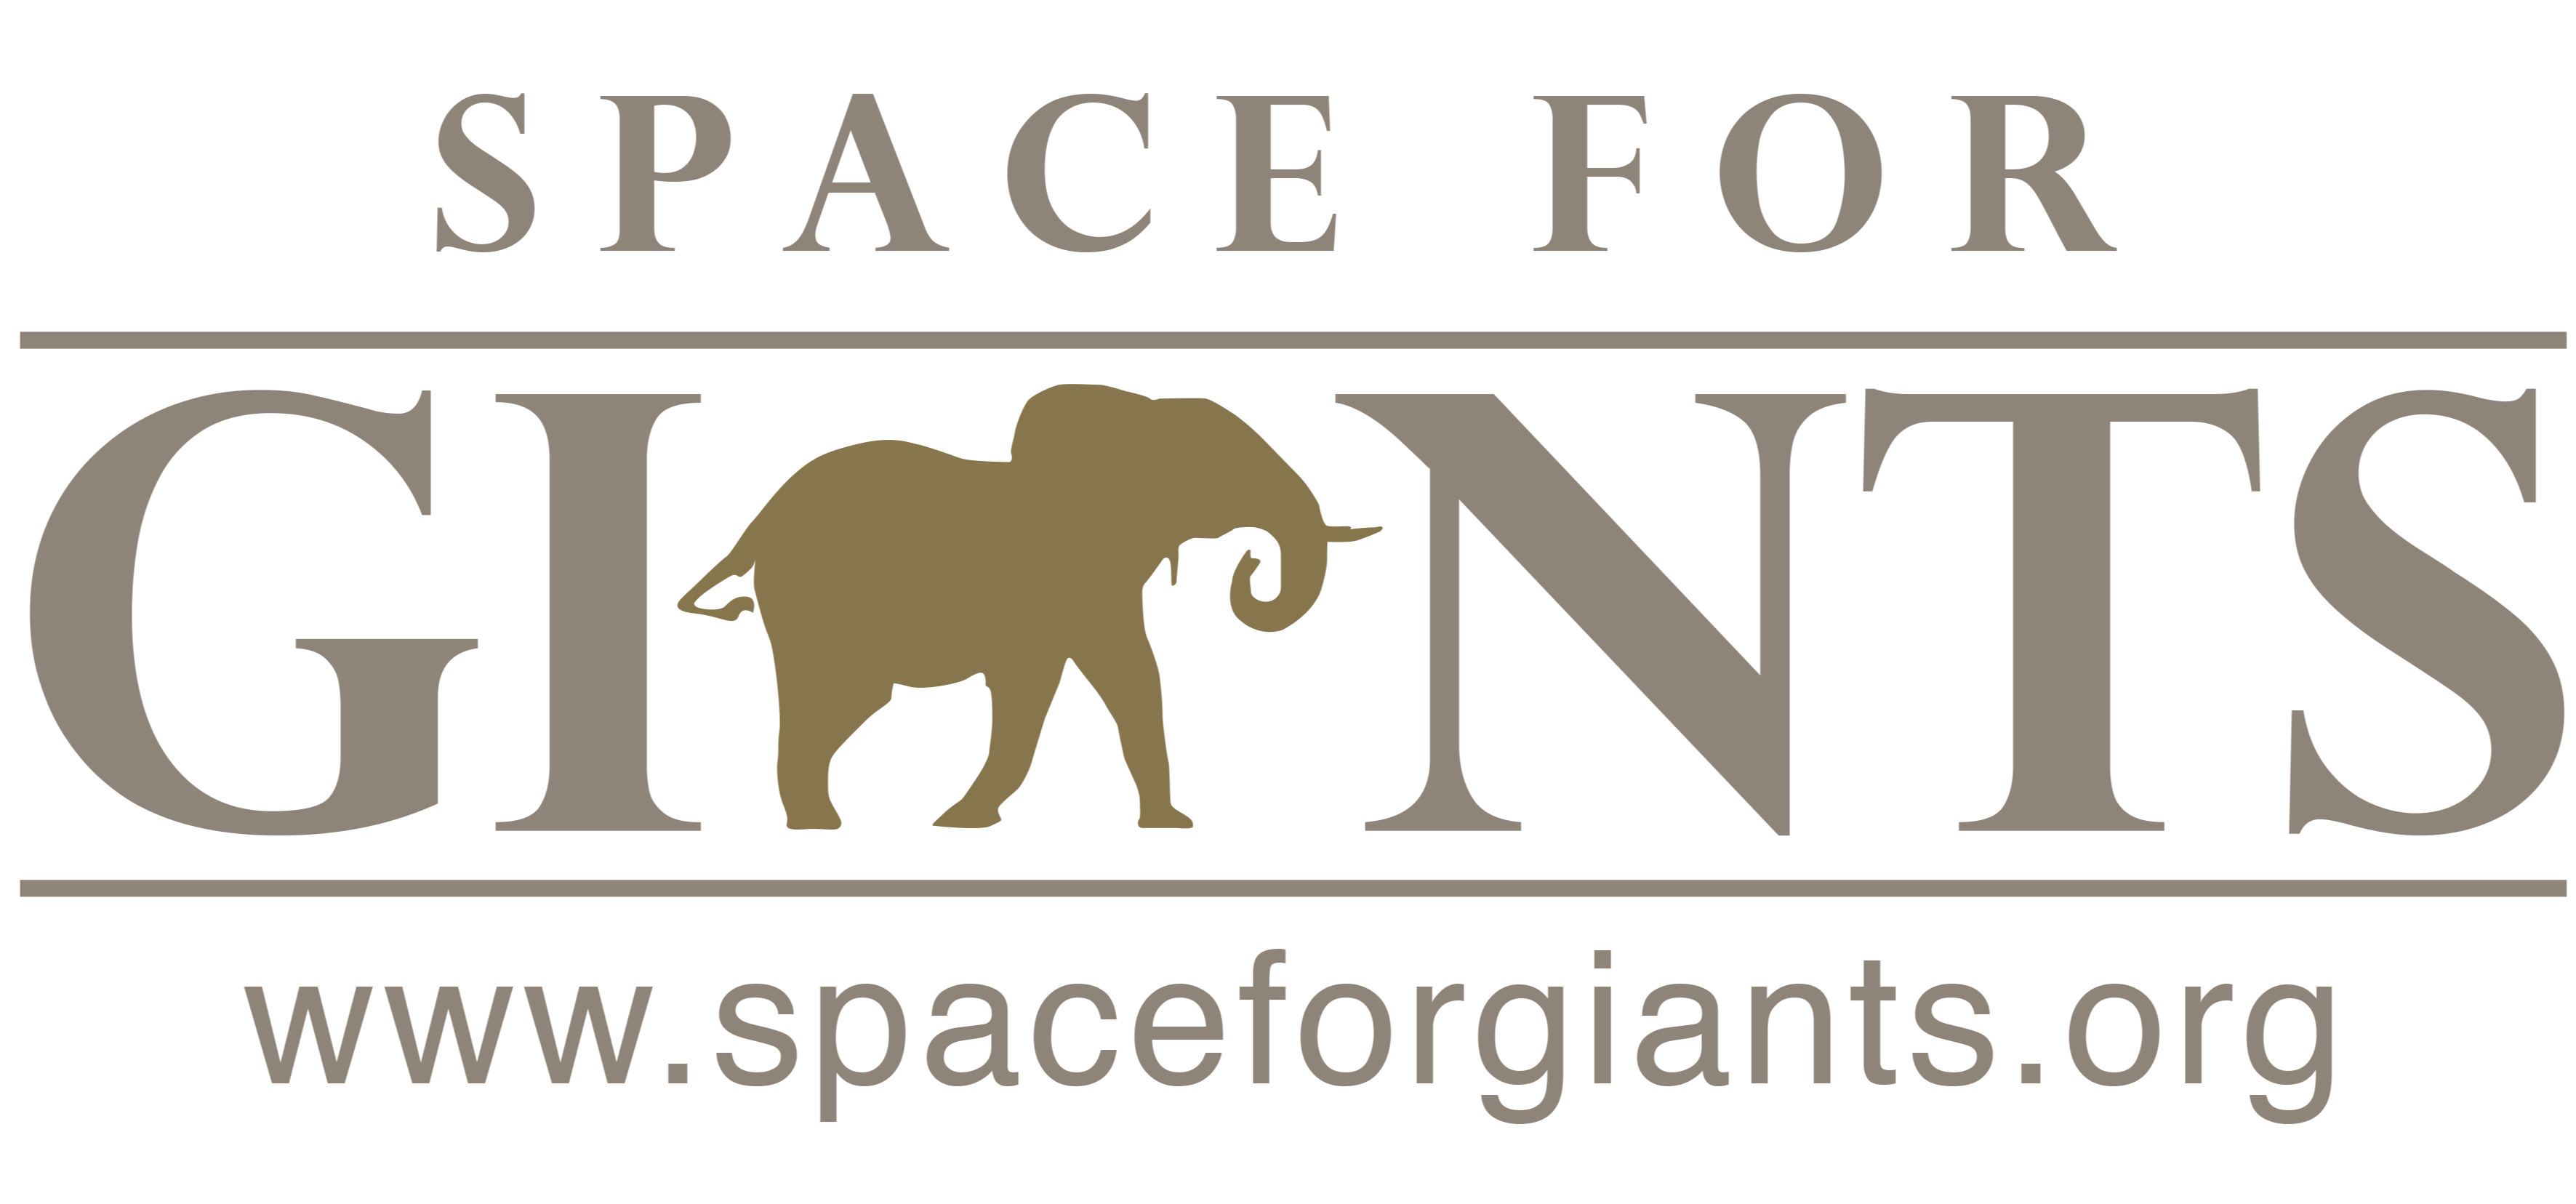 Space for Giants UK logo